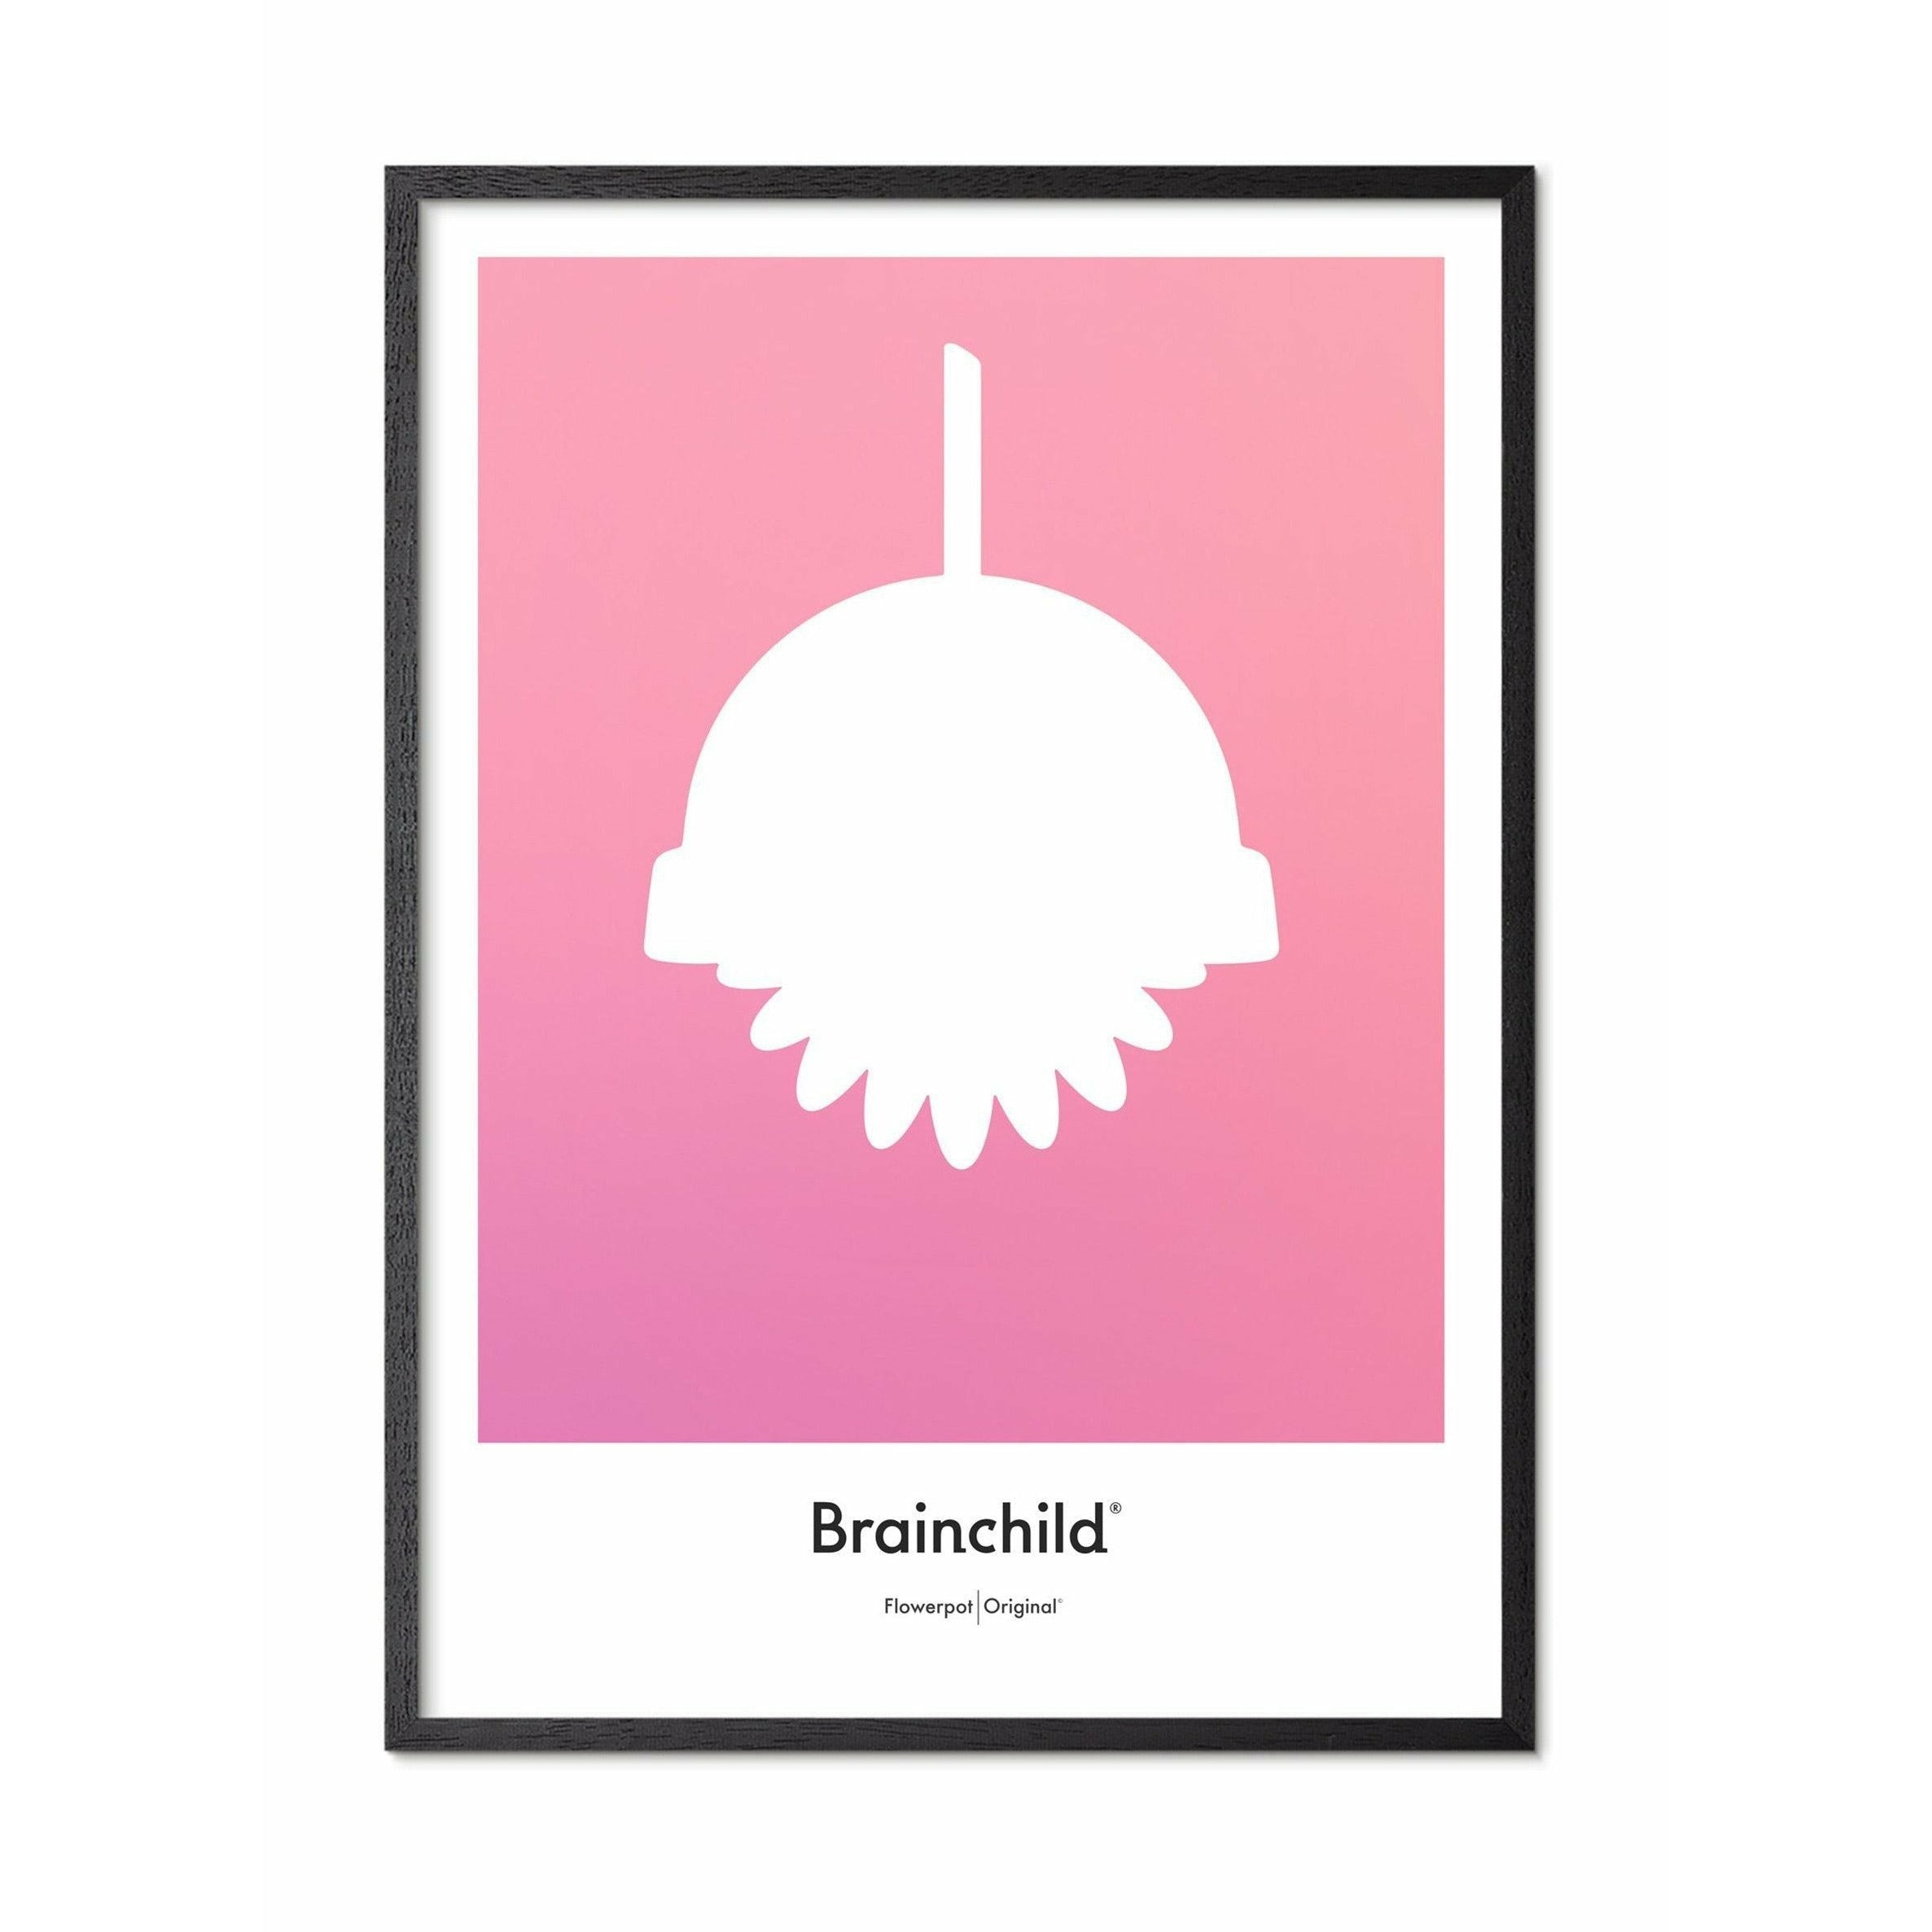 Brainchild Bloempotontwerppictogram Poster, zwart gelakt houten frame A5, roze